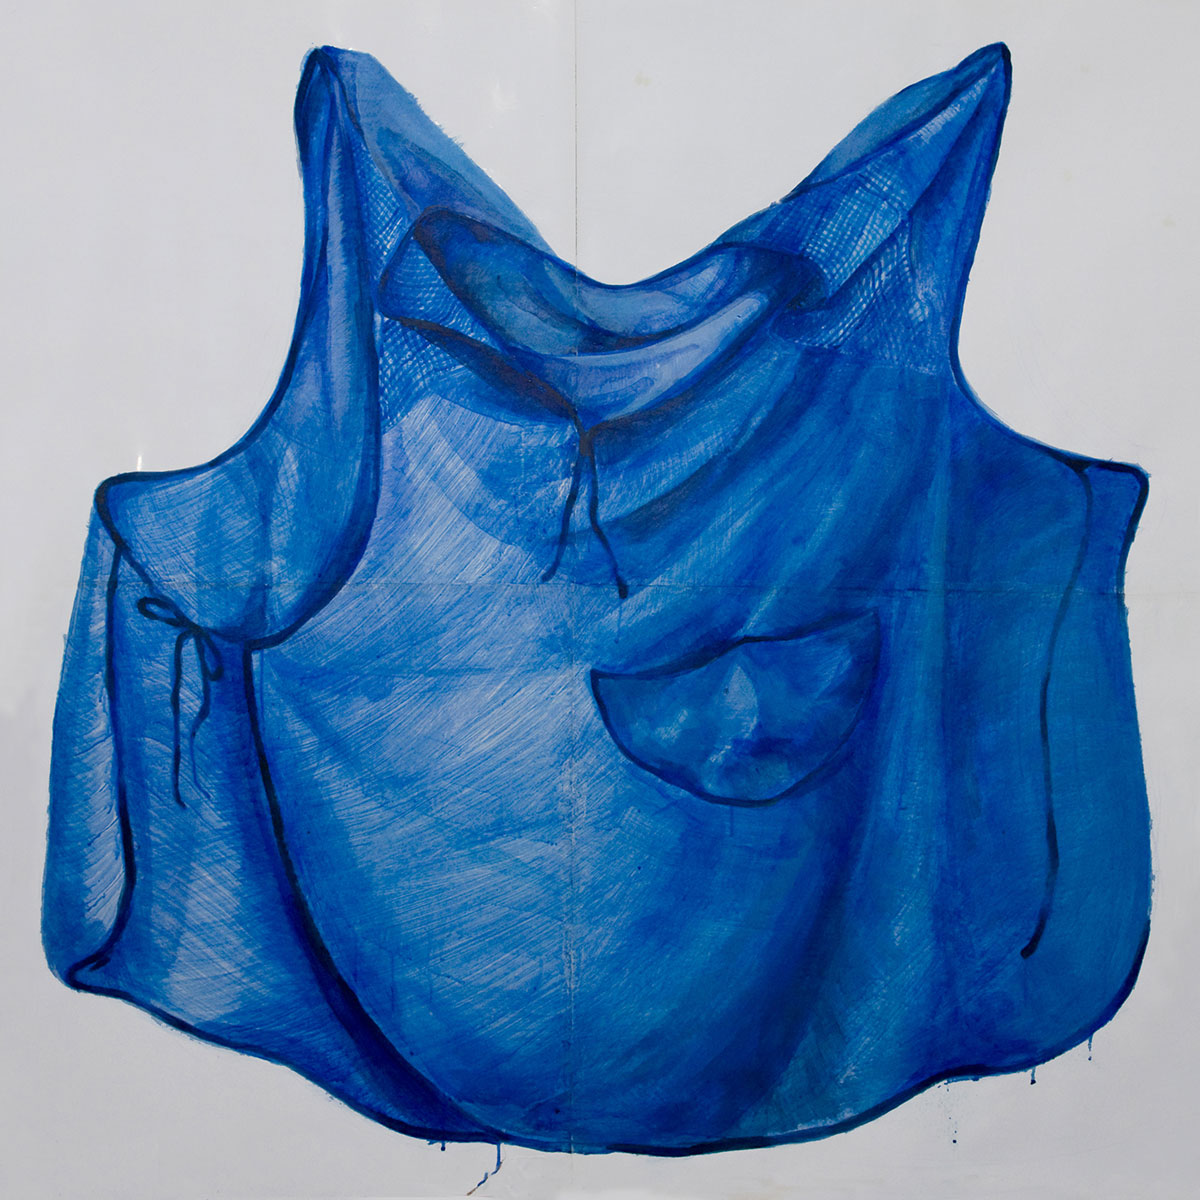 Varia   Madre, 2009, akryl na papierze, 130x190cm